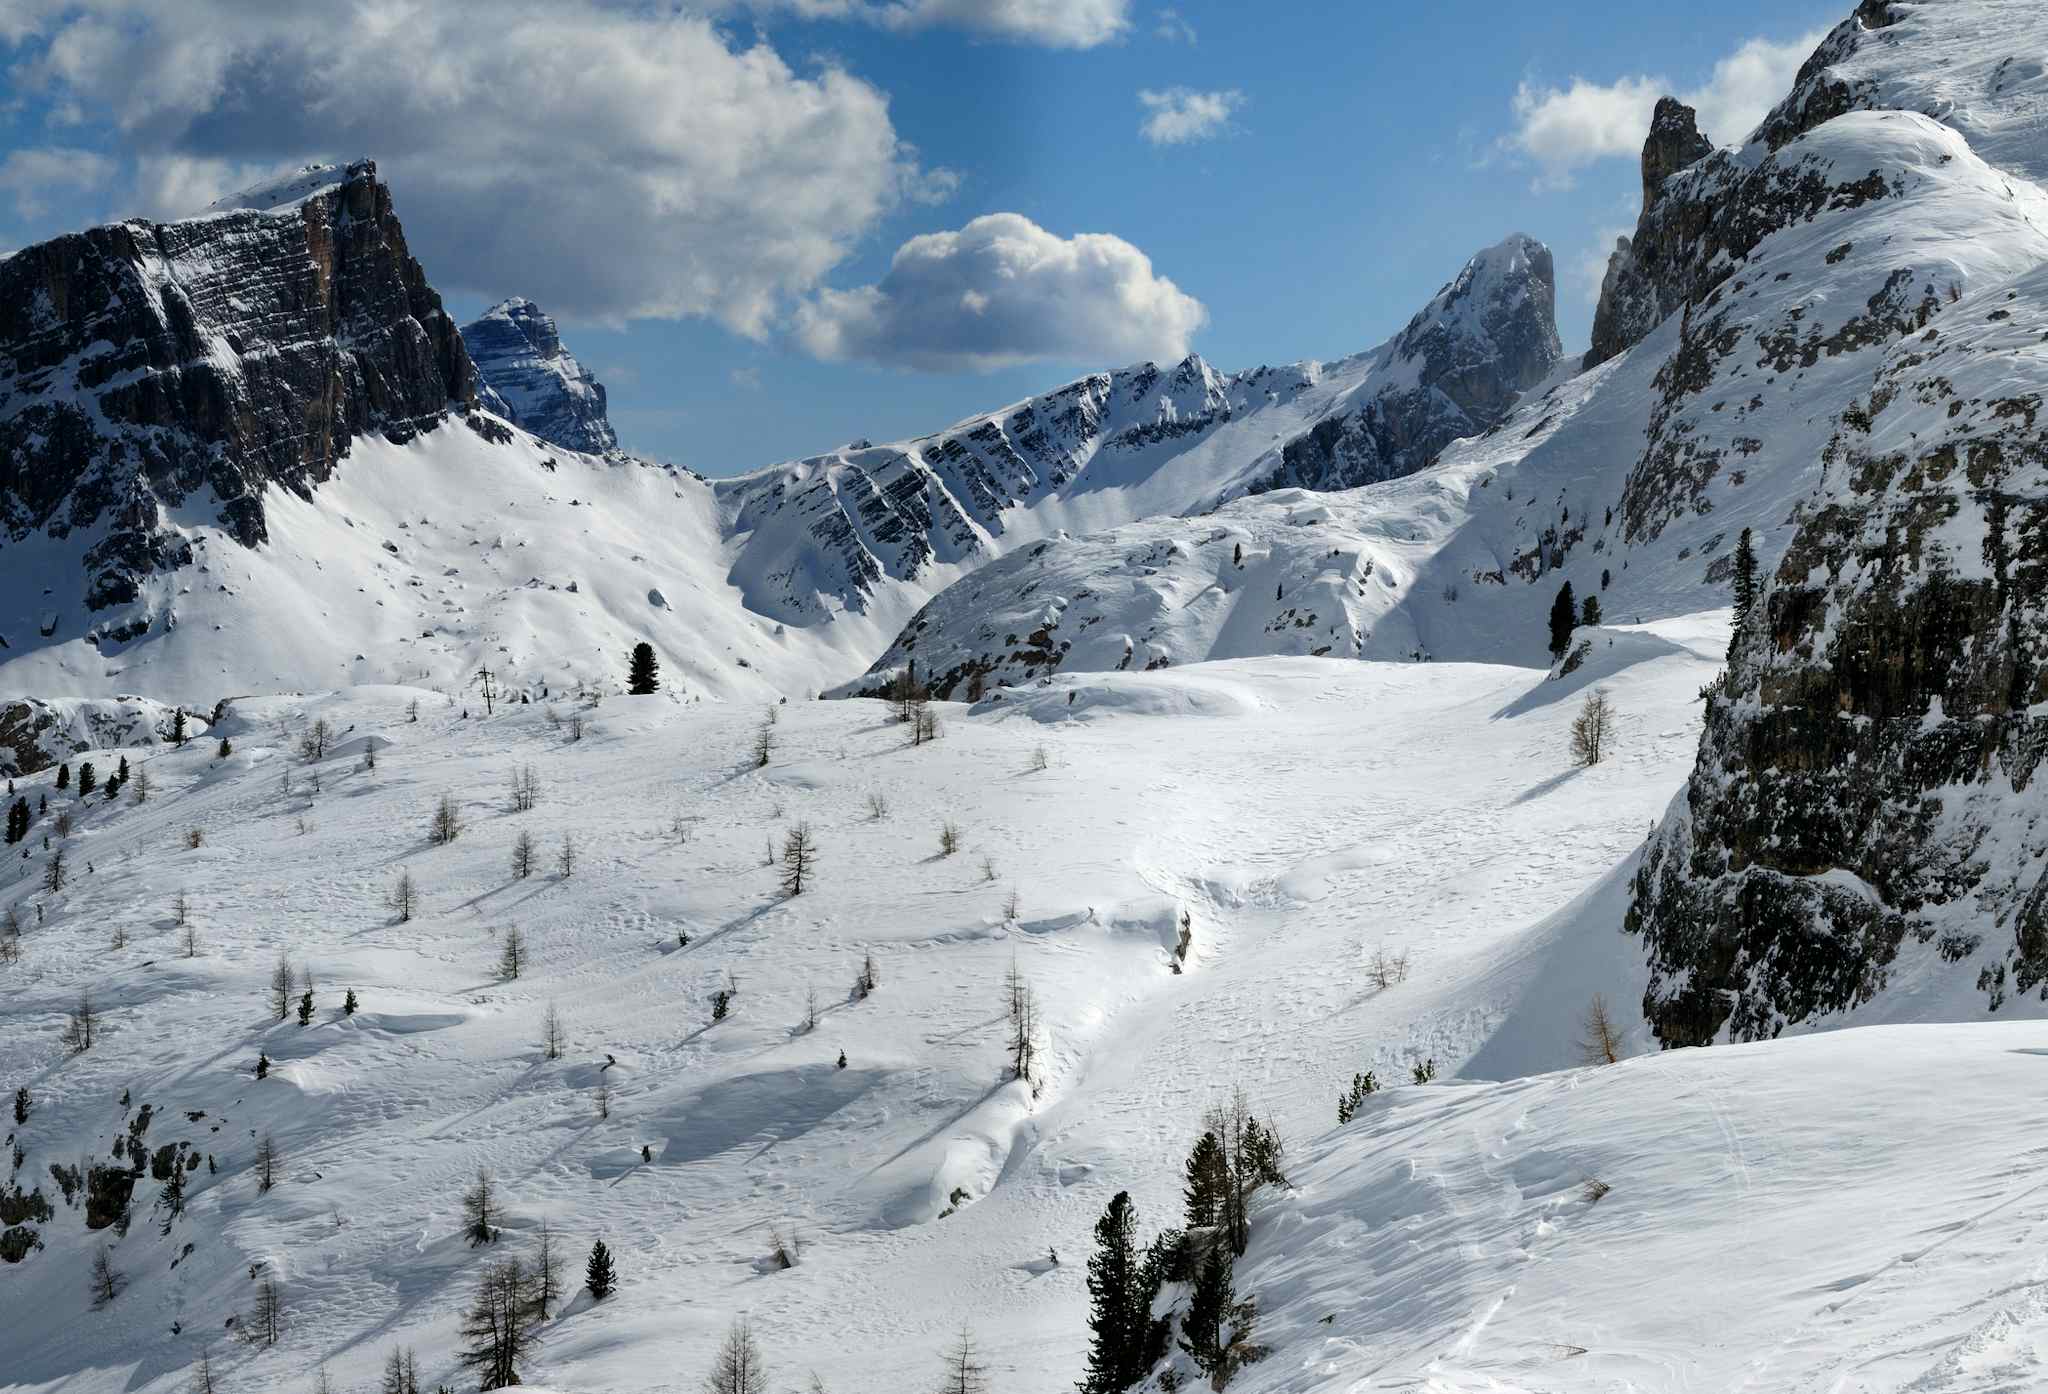 Winter panorama in the Dolomites near Cortina d'Ampezzo, Italy.